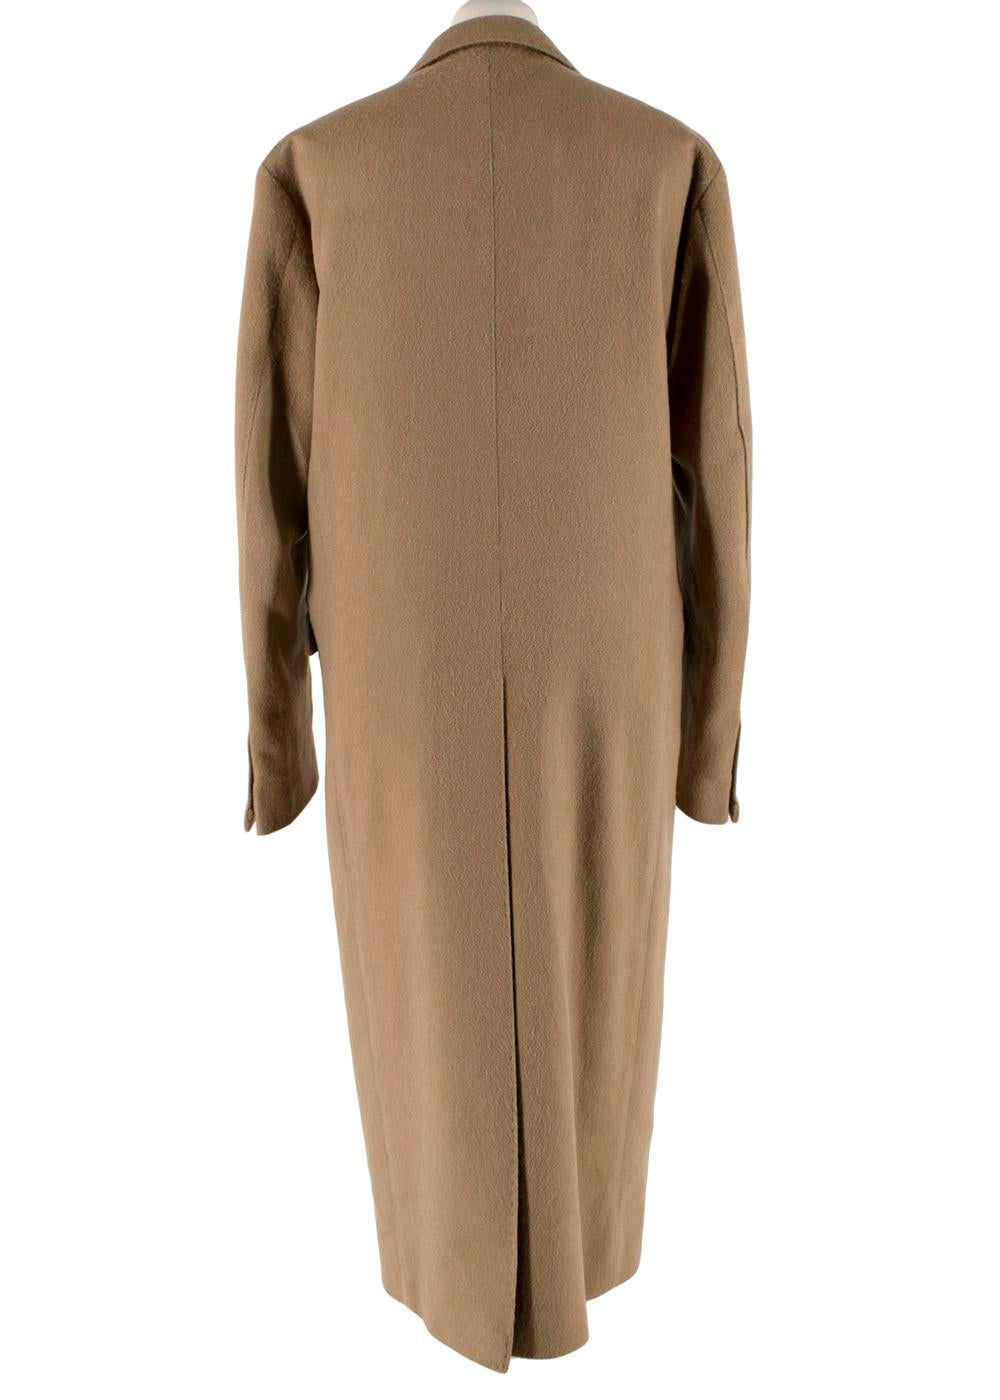 Brown Giuliva Heritage Camel Wool & Cashmere Cindy Coat - Size US 8